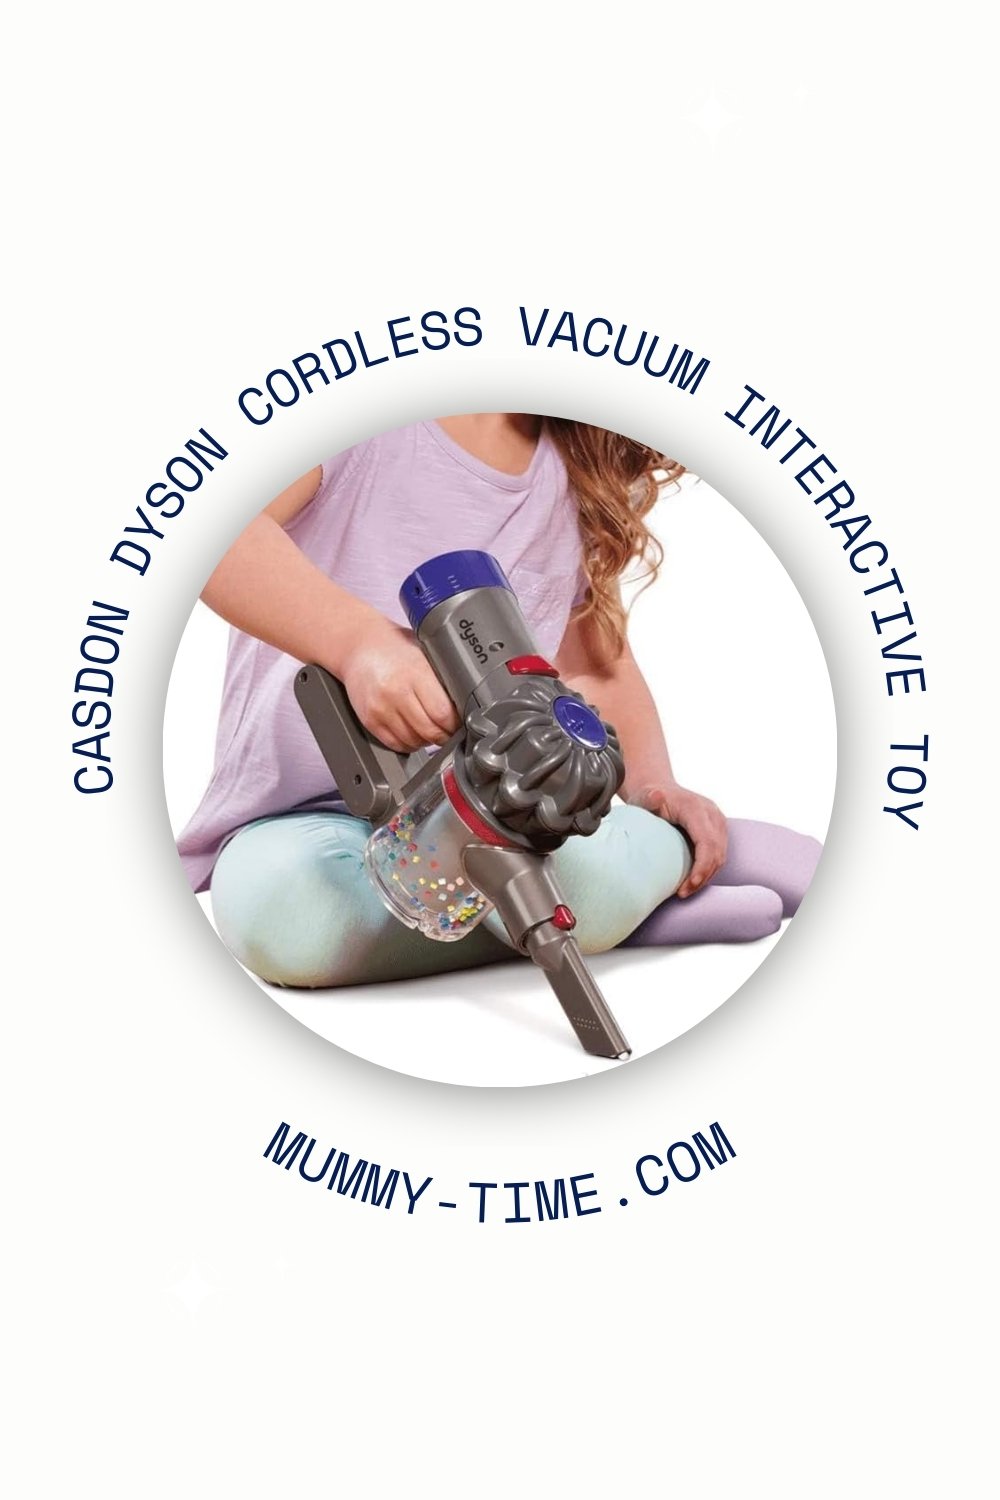 Casdon 68702 Dyson Cordless Vacuum Interactive Toy